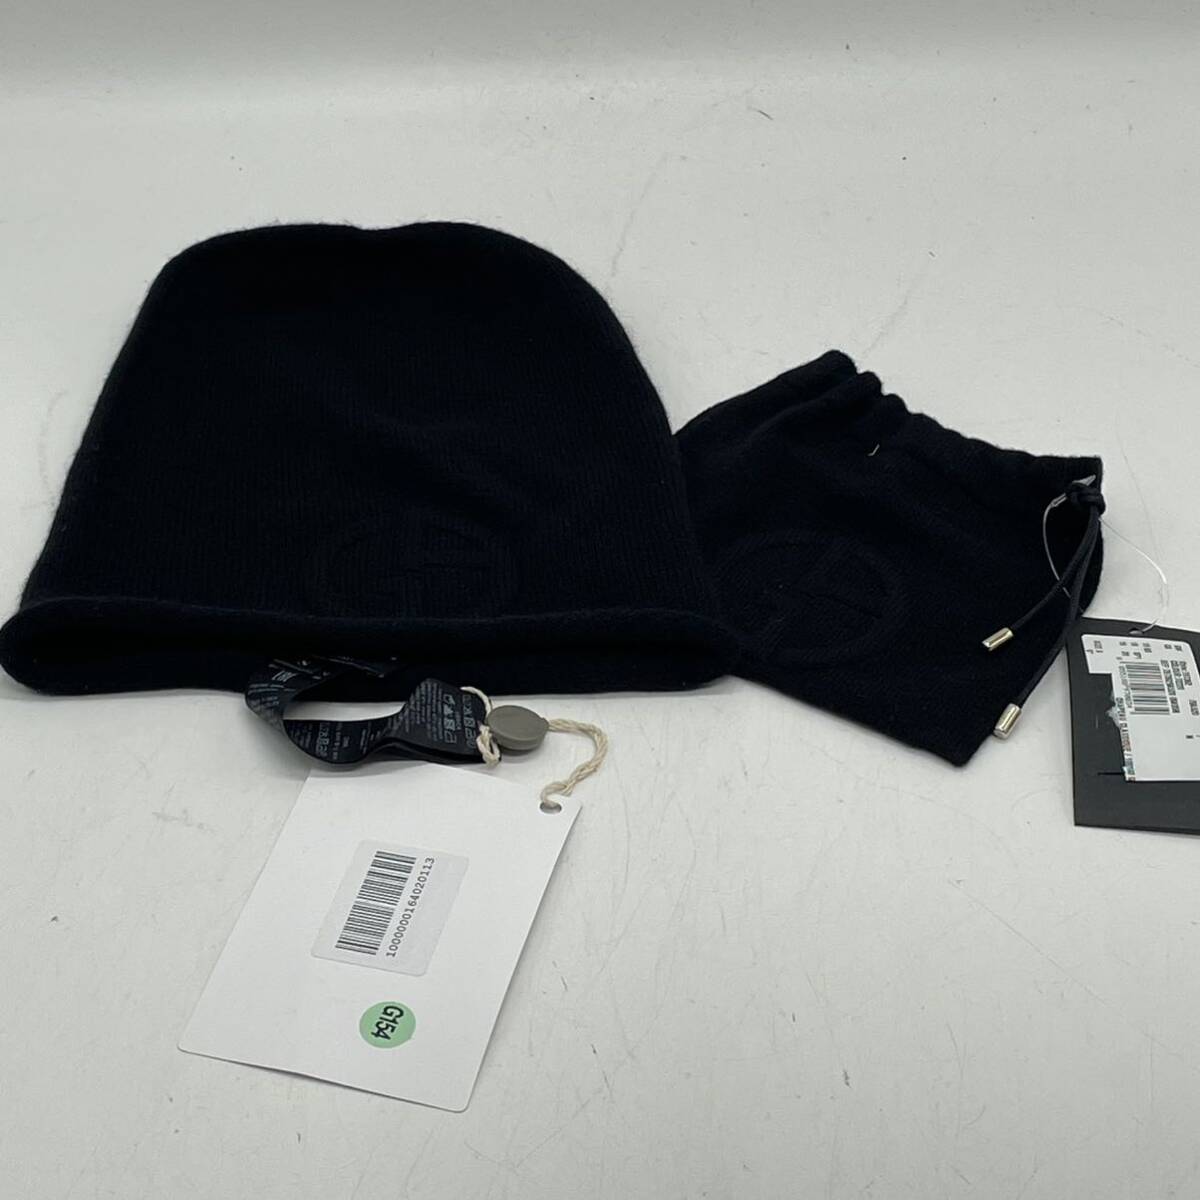 KO1846*GIORGIO ARMANIjoru geo Armani Italy made cashmere knit cap Beanie hat Mini pouch attaching tag attaching unused goods 